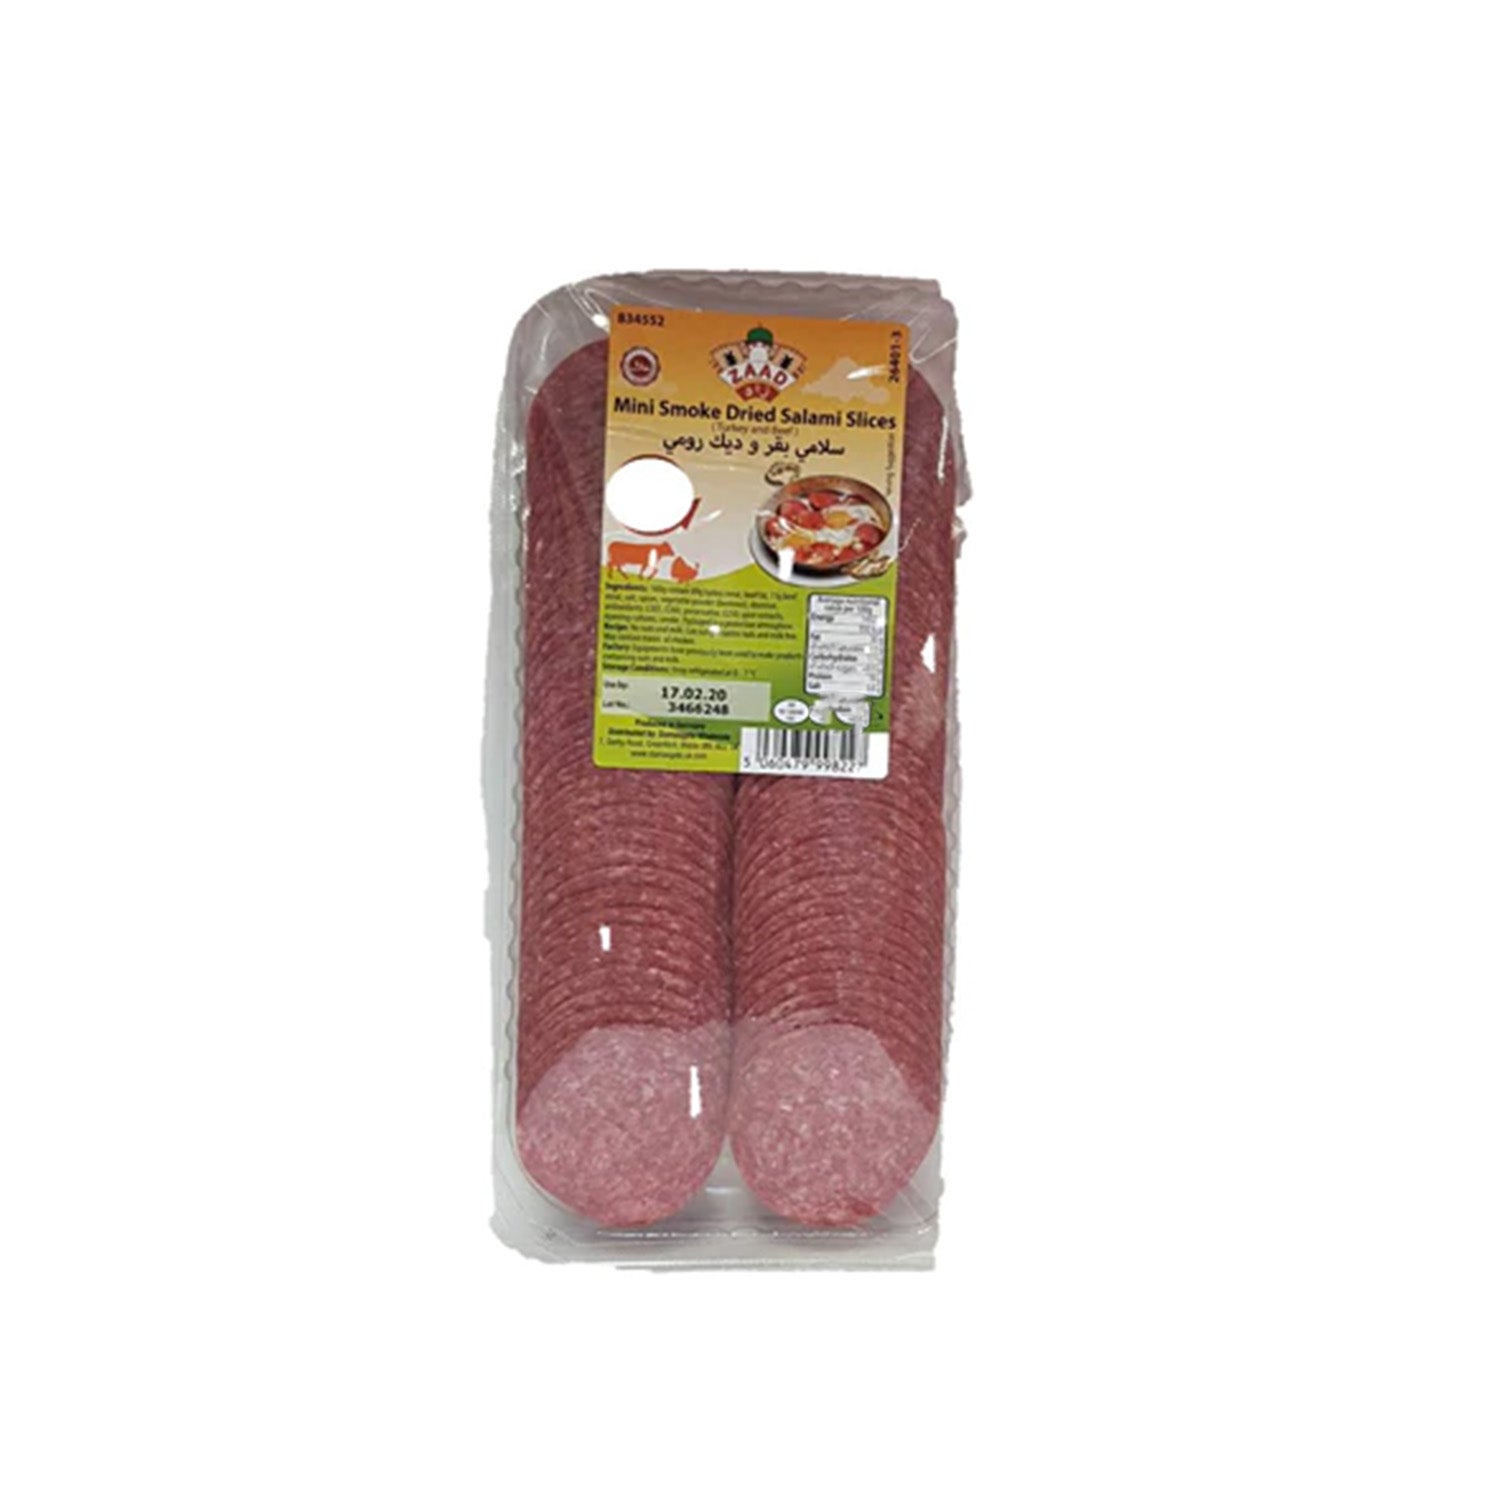 Offer Zaad Mini Smoke Dried Salami Slices 200g X 2 packs